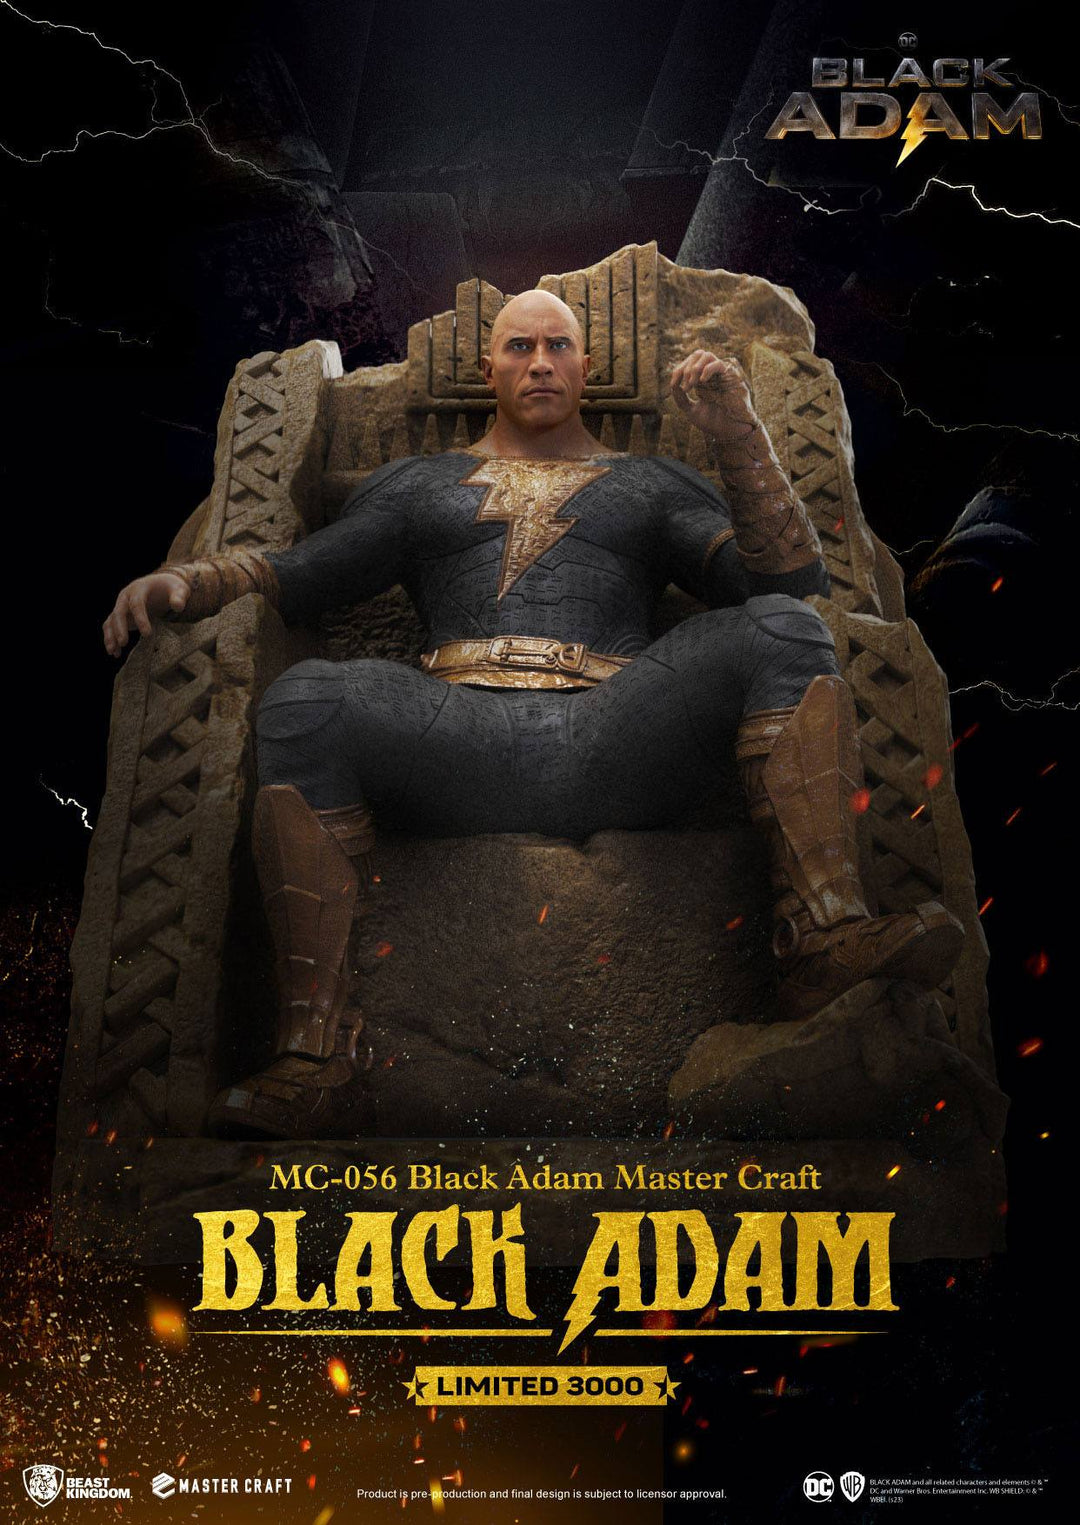 Beast Kingdom Black Adam Master Craft Black Adam Limited Edition Statue